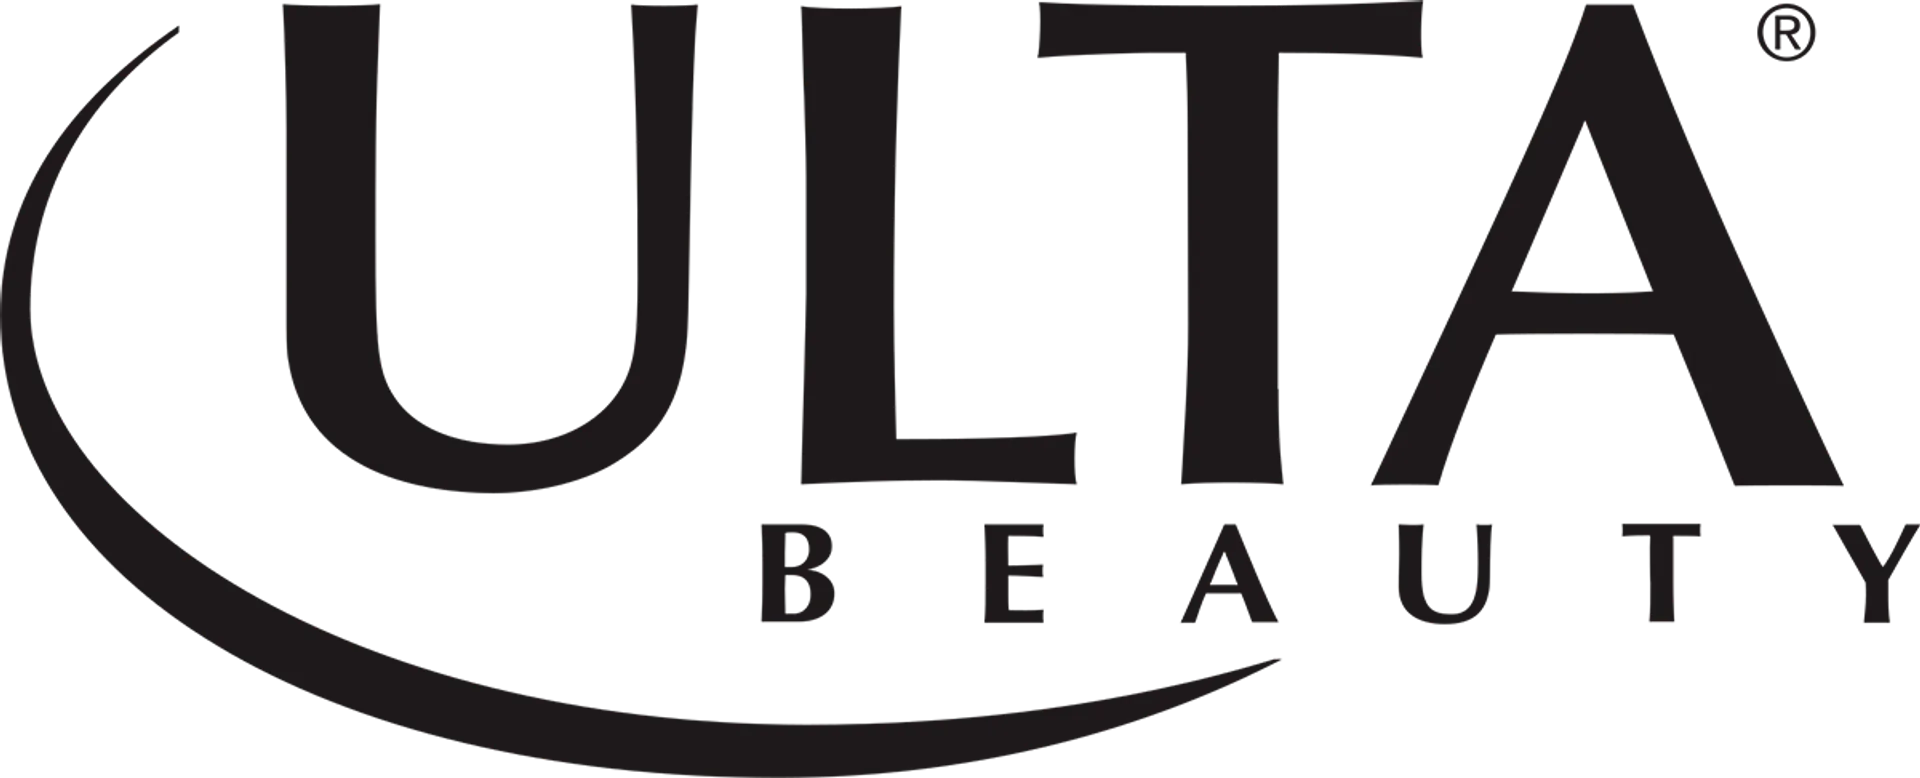 ULTA BEAUTY logo de catálogo